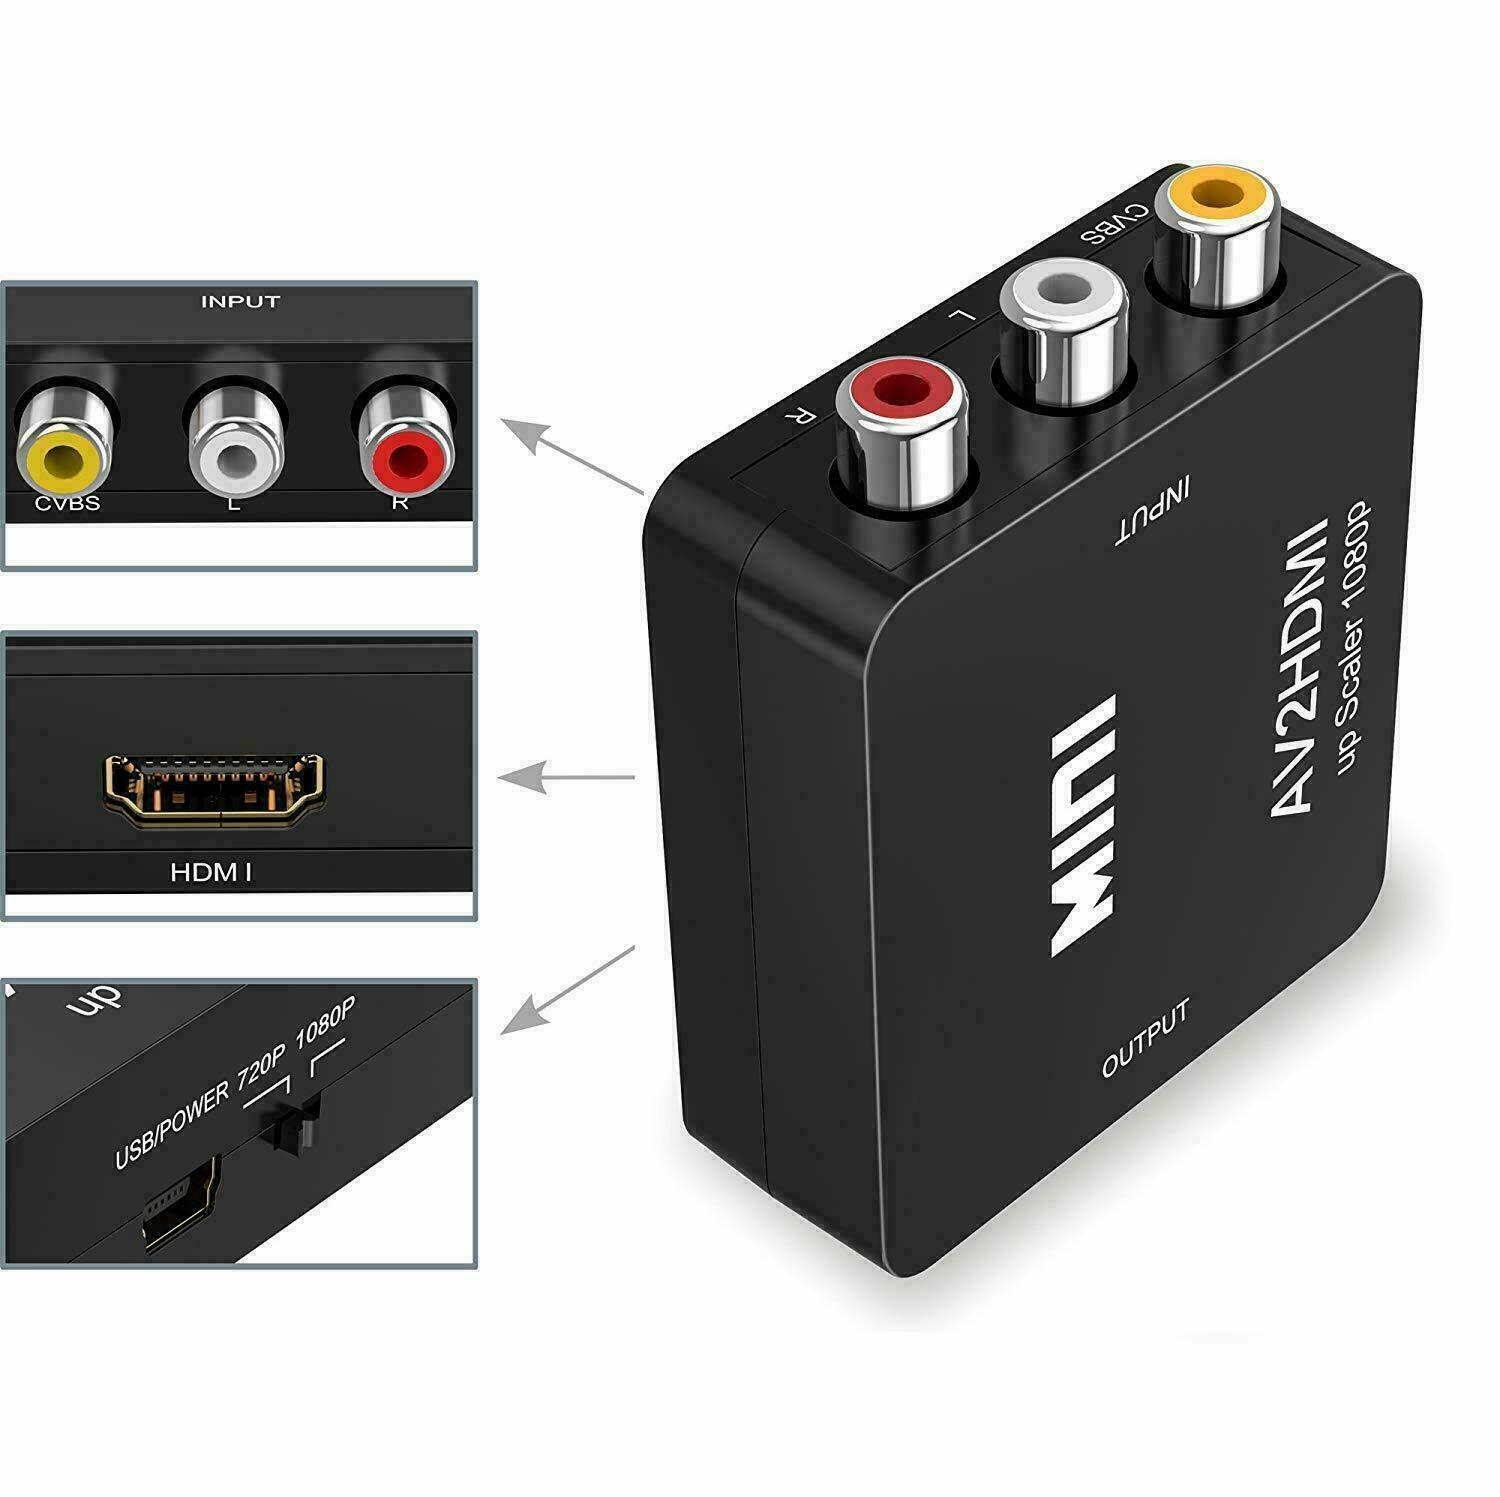 pumpe Tick fire RCA to HDMI Converter Composite AVI CVBS Video Adapter 720p 1080p Wii –  German Audio Tech